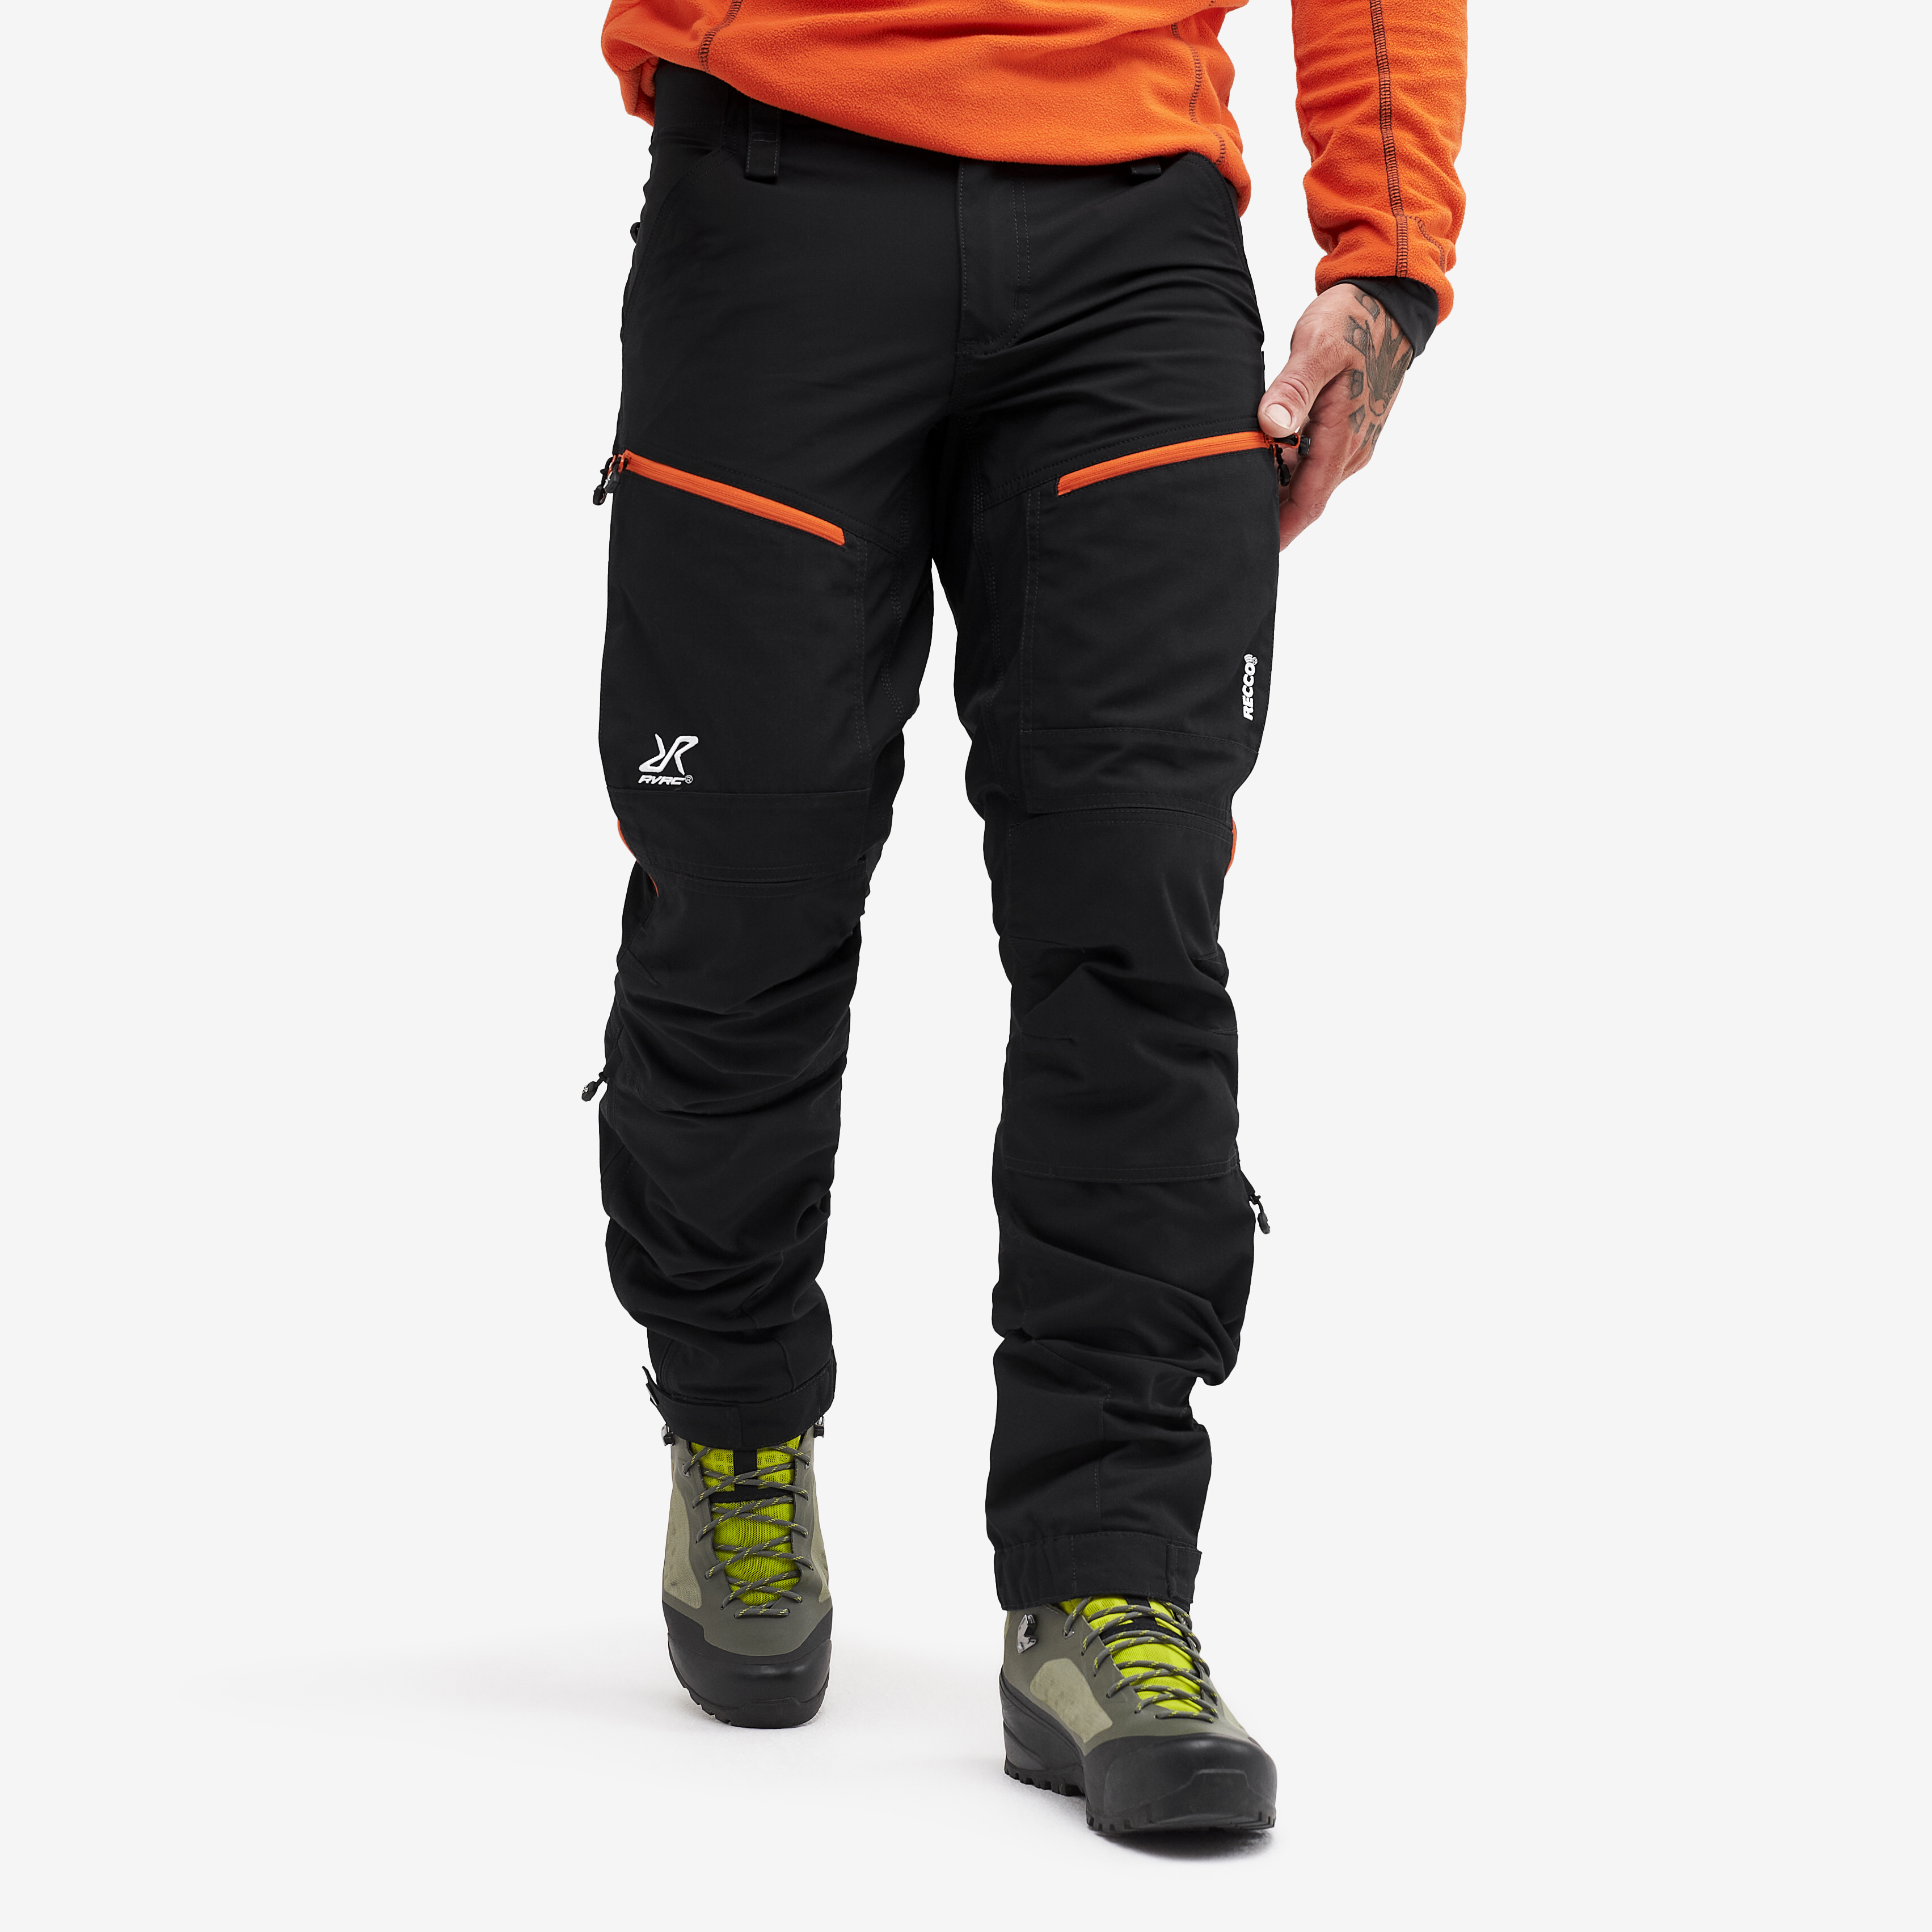 RVRC GP Pro Rescue Trousers Black/Orange 2.0 Men